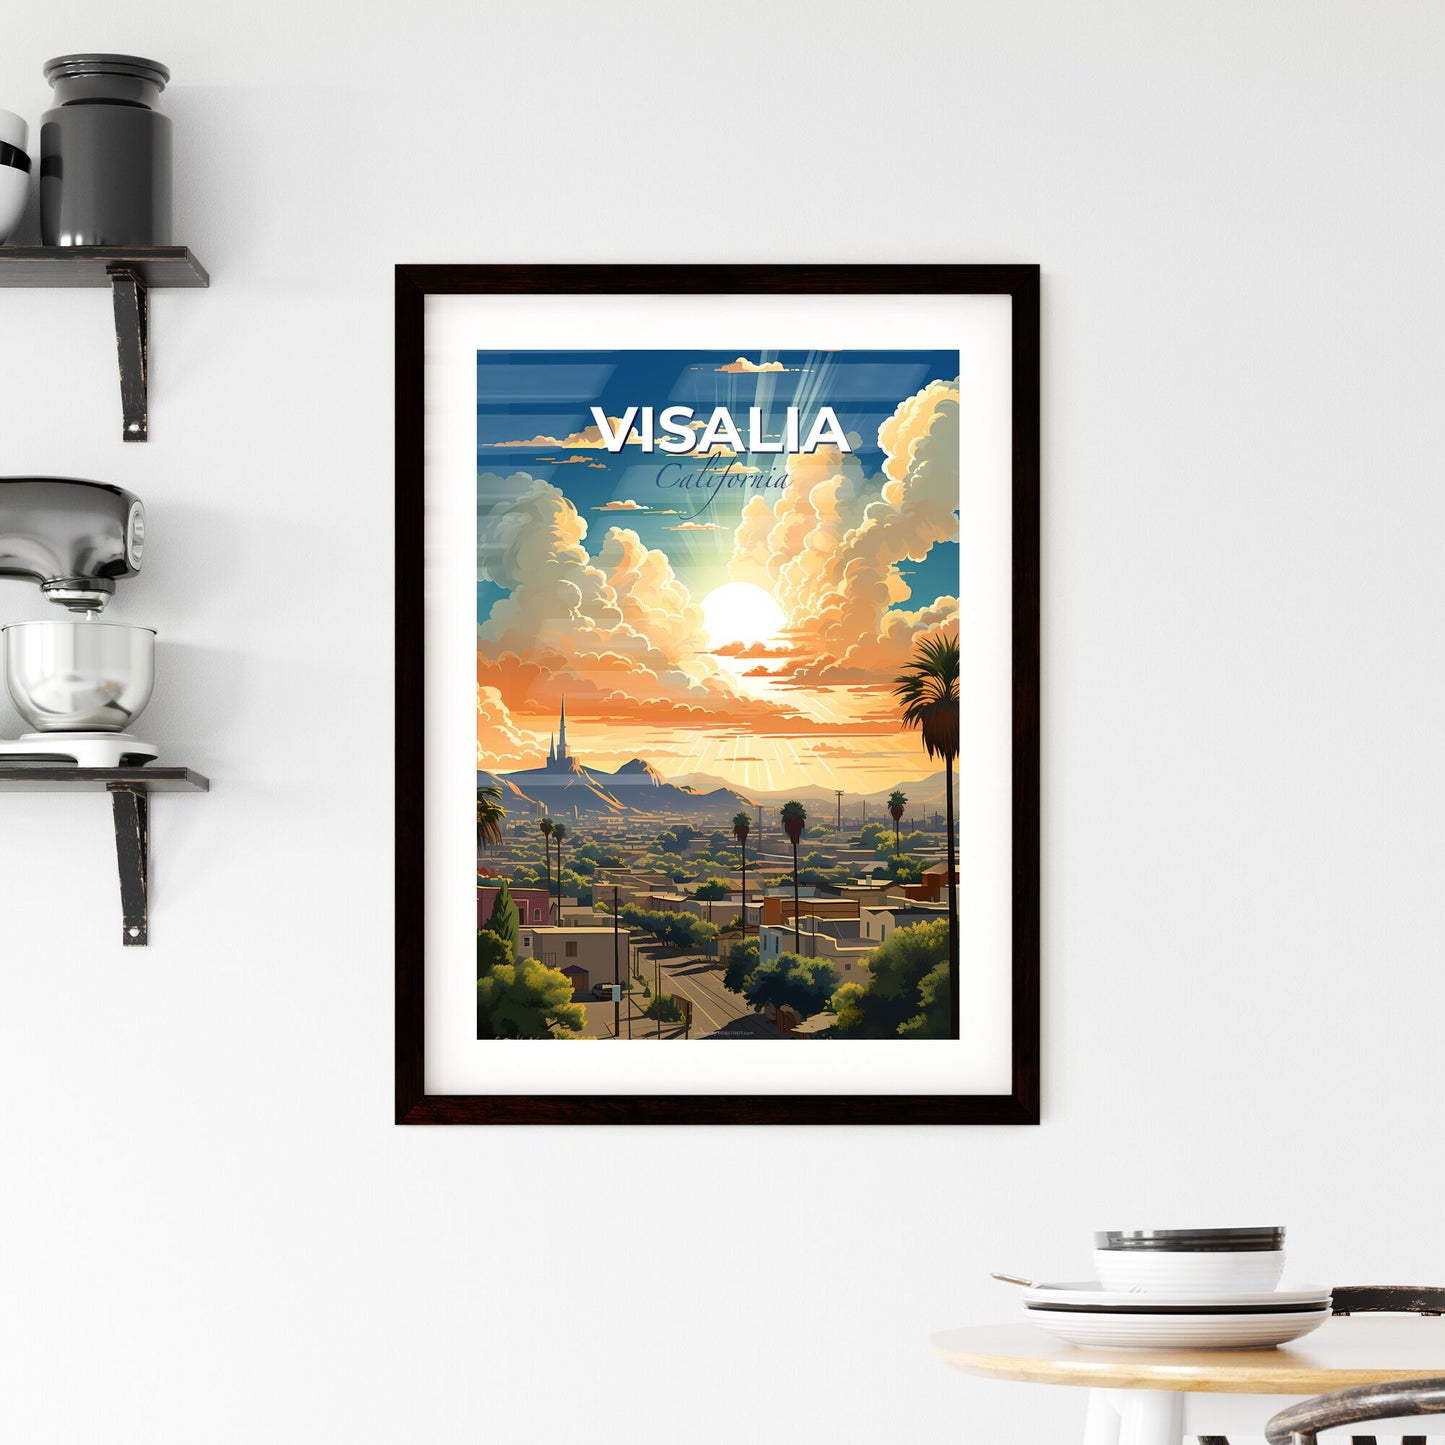 Visalia, California, A Poster of a sun shining through clouds over a city Default Title